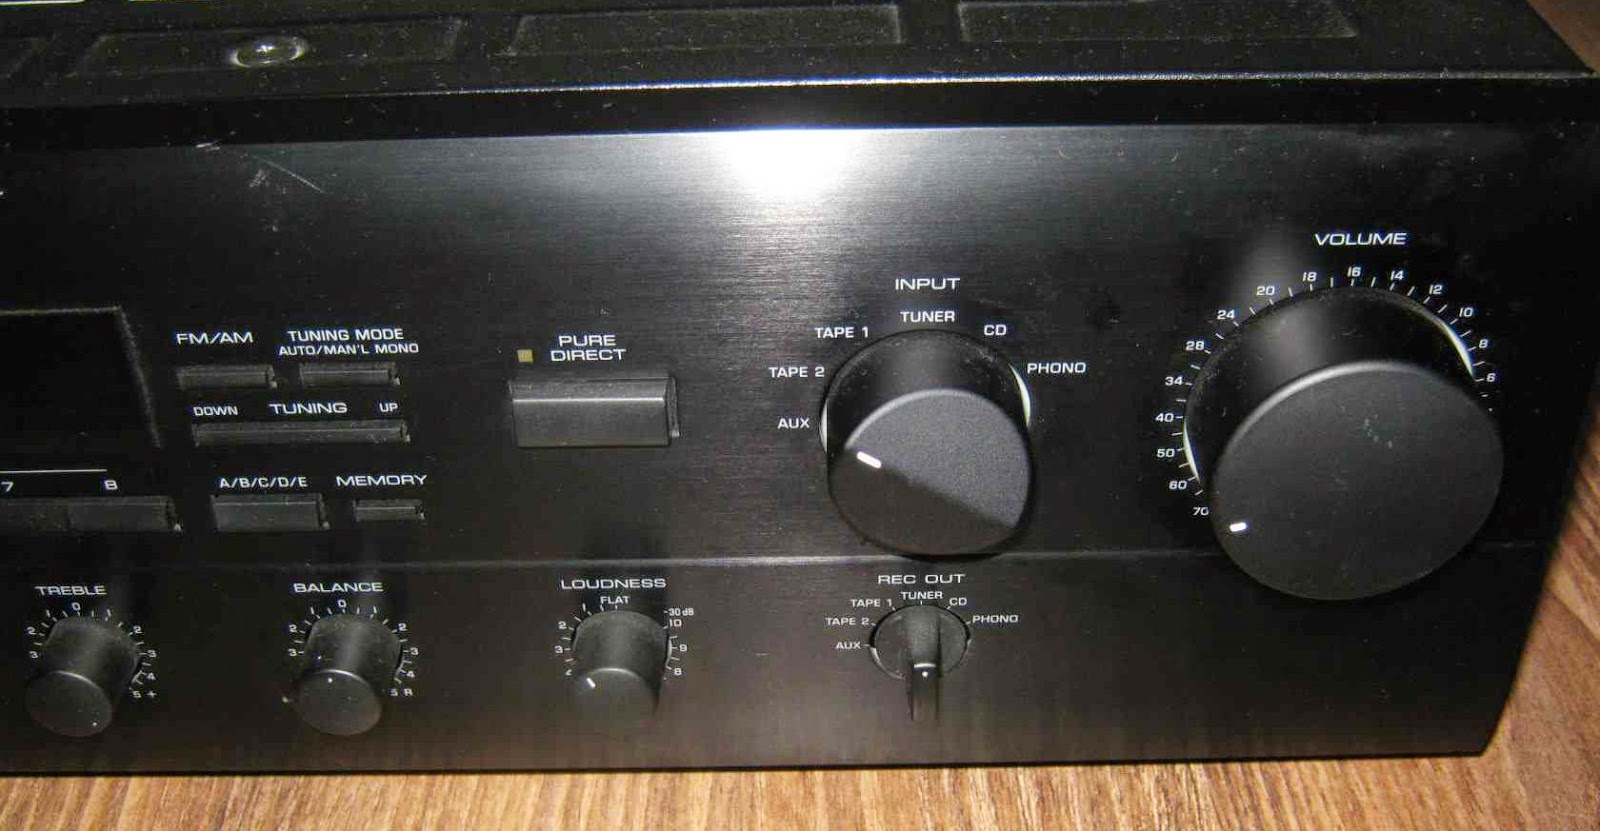 Yamaha RX-750 - Stereo Receiver | AudioBaza